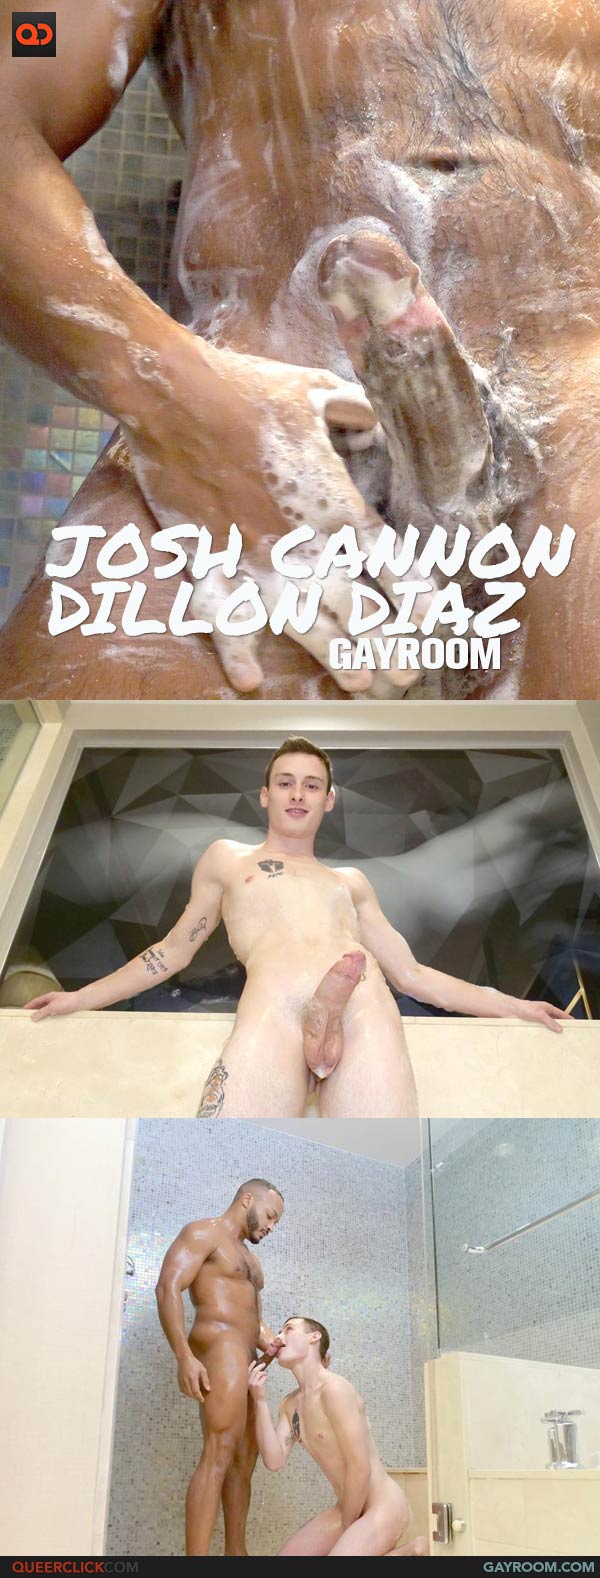 Gay Room: Josh Cannon and Dillon Diaz